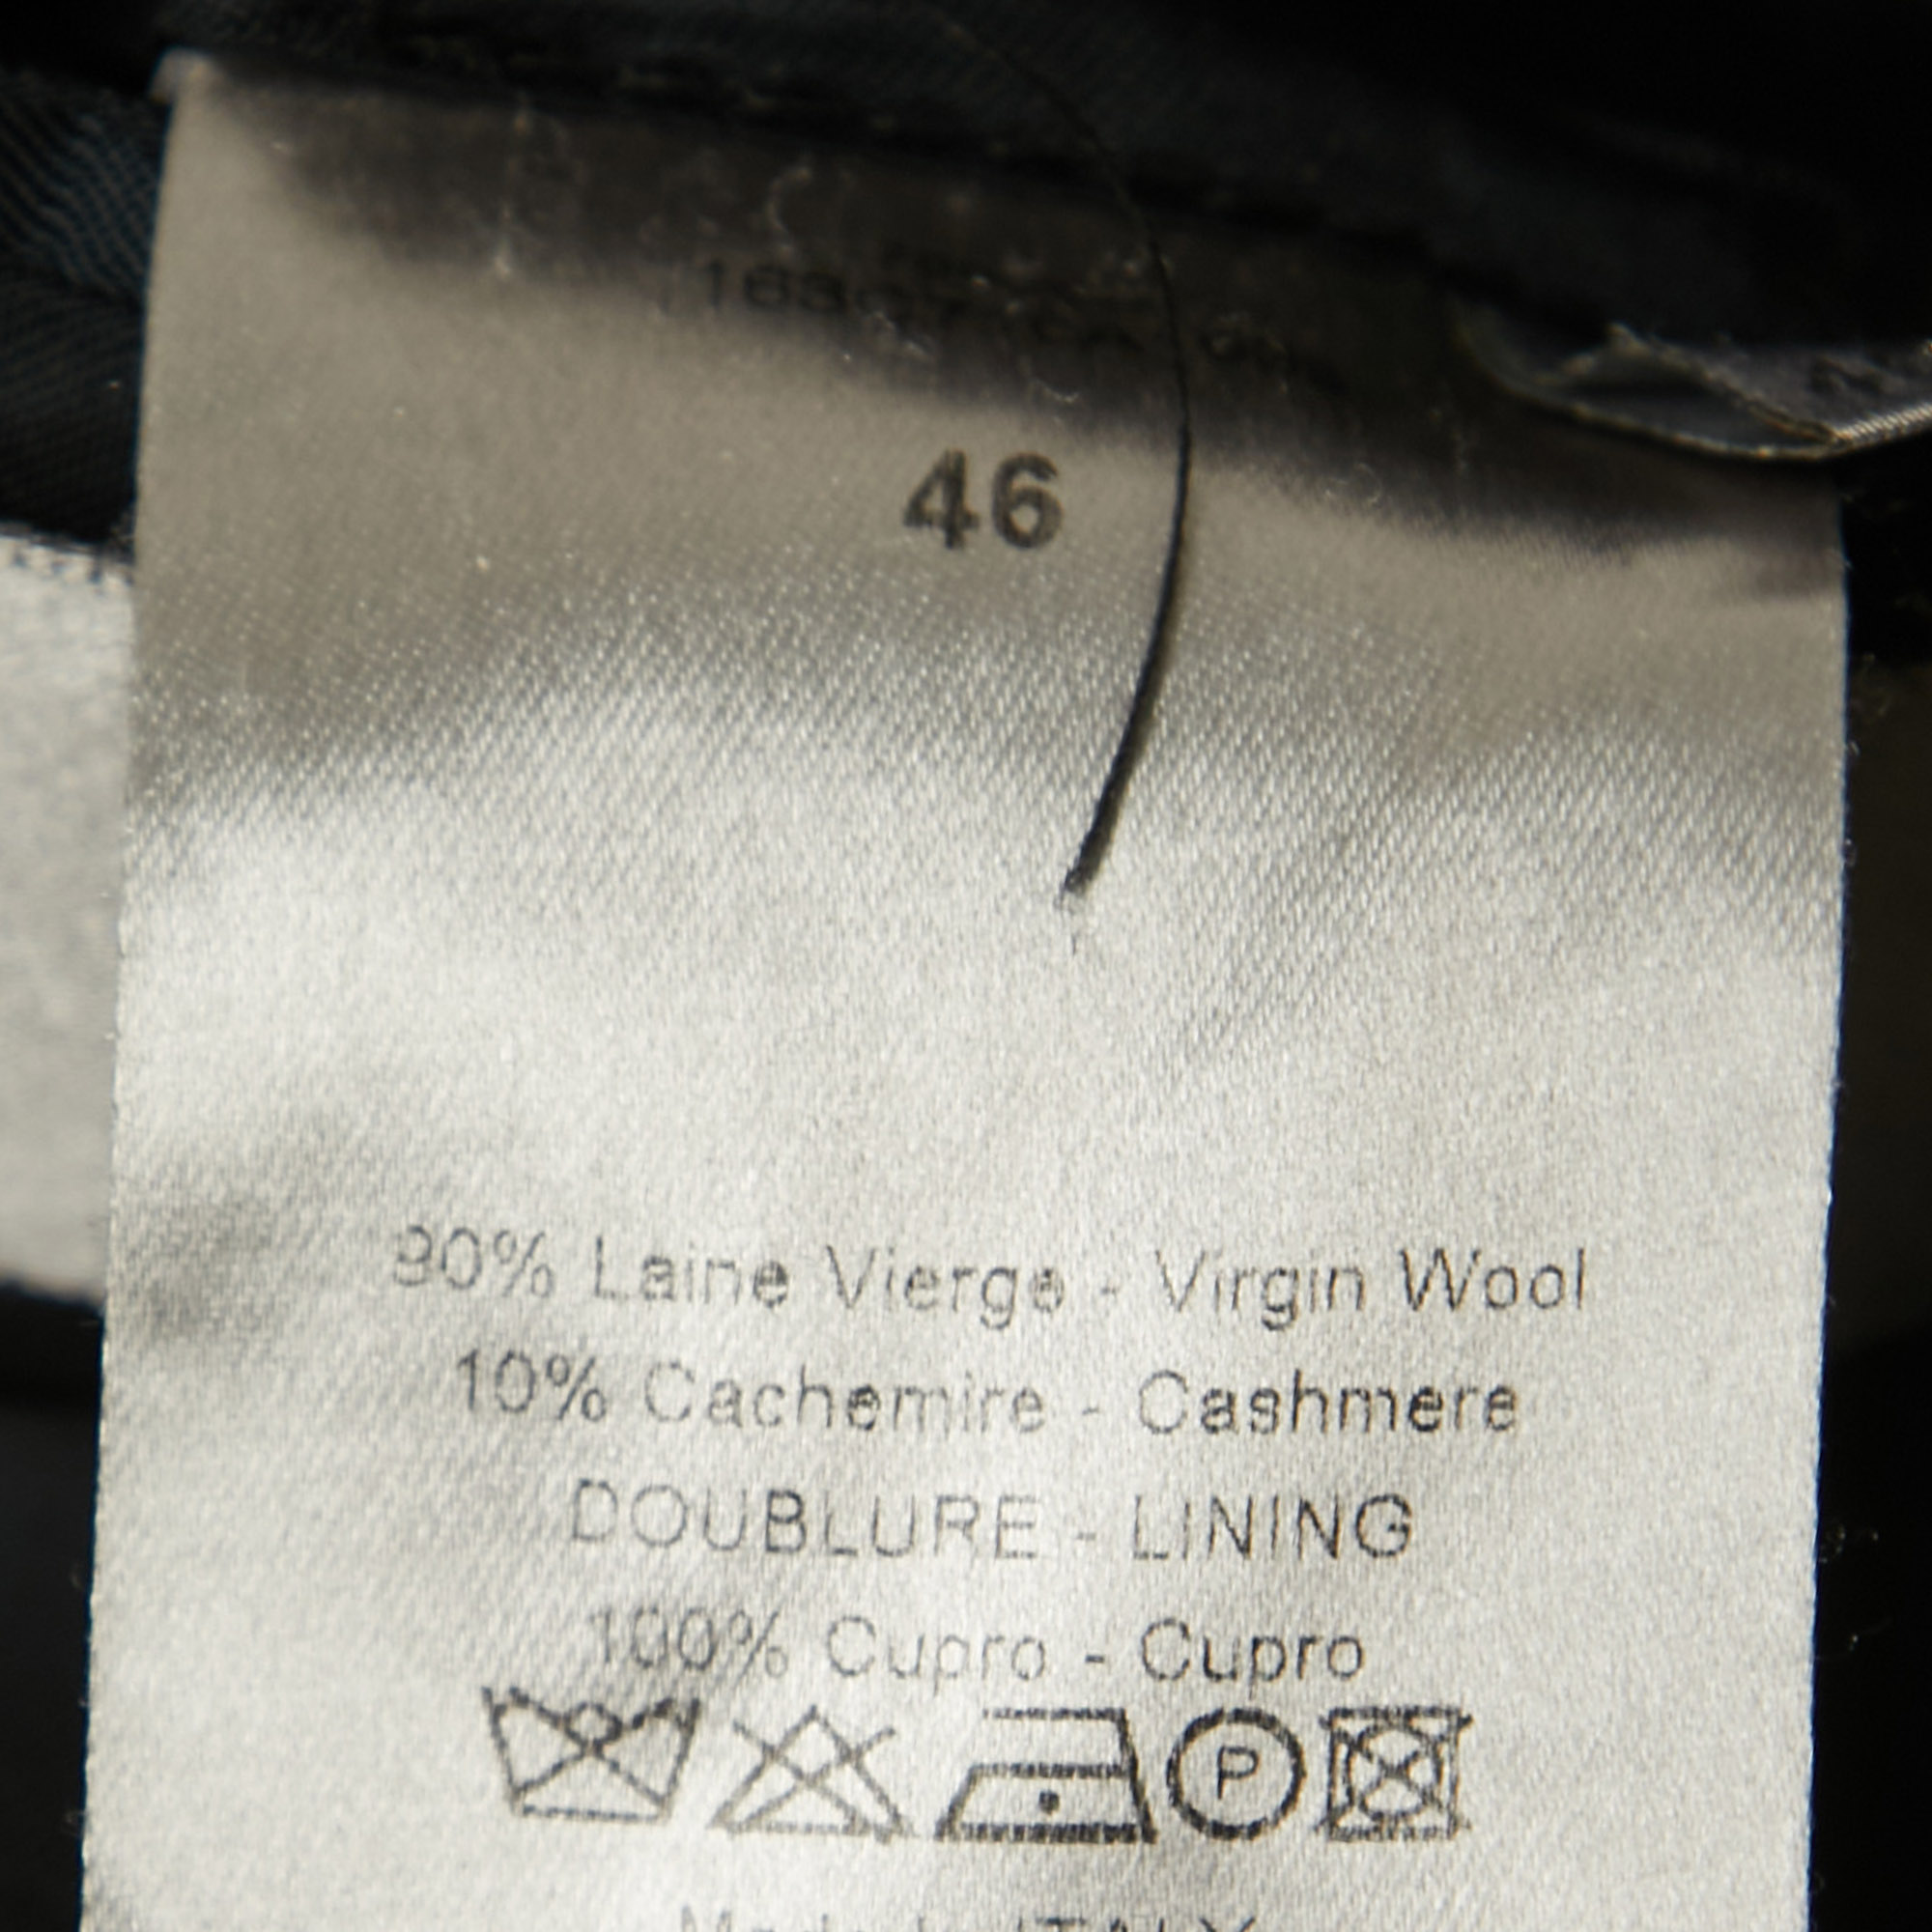 Dior Grey Wool Single-Breasted Jacket S